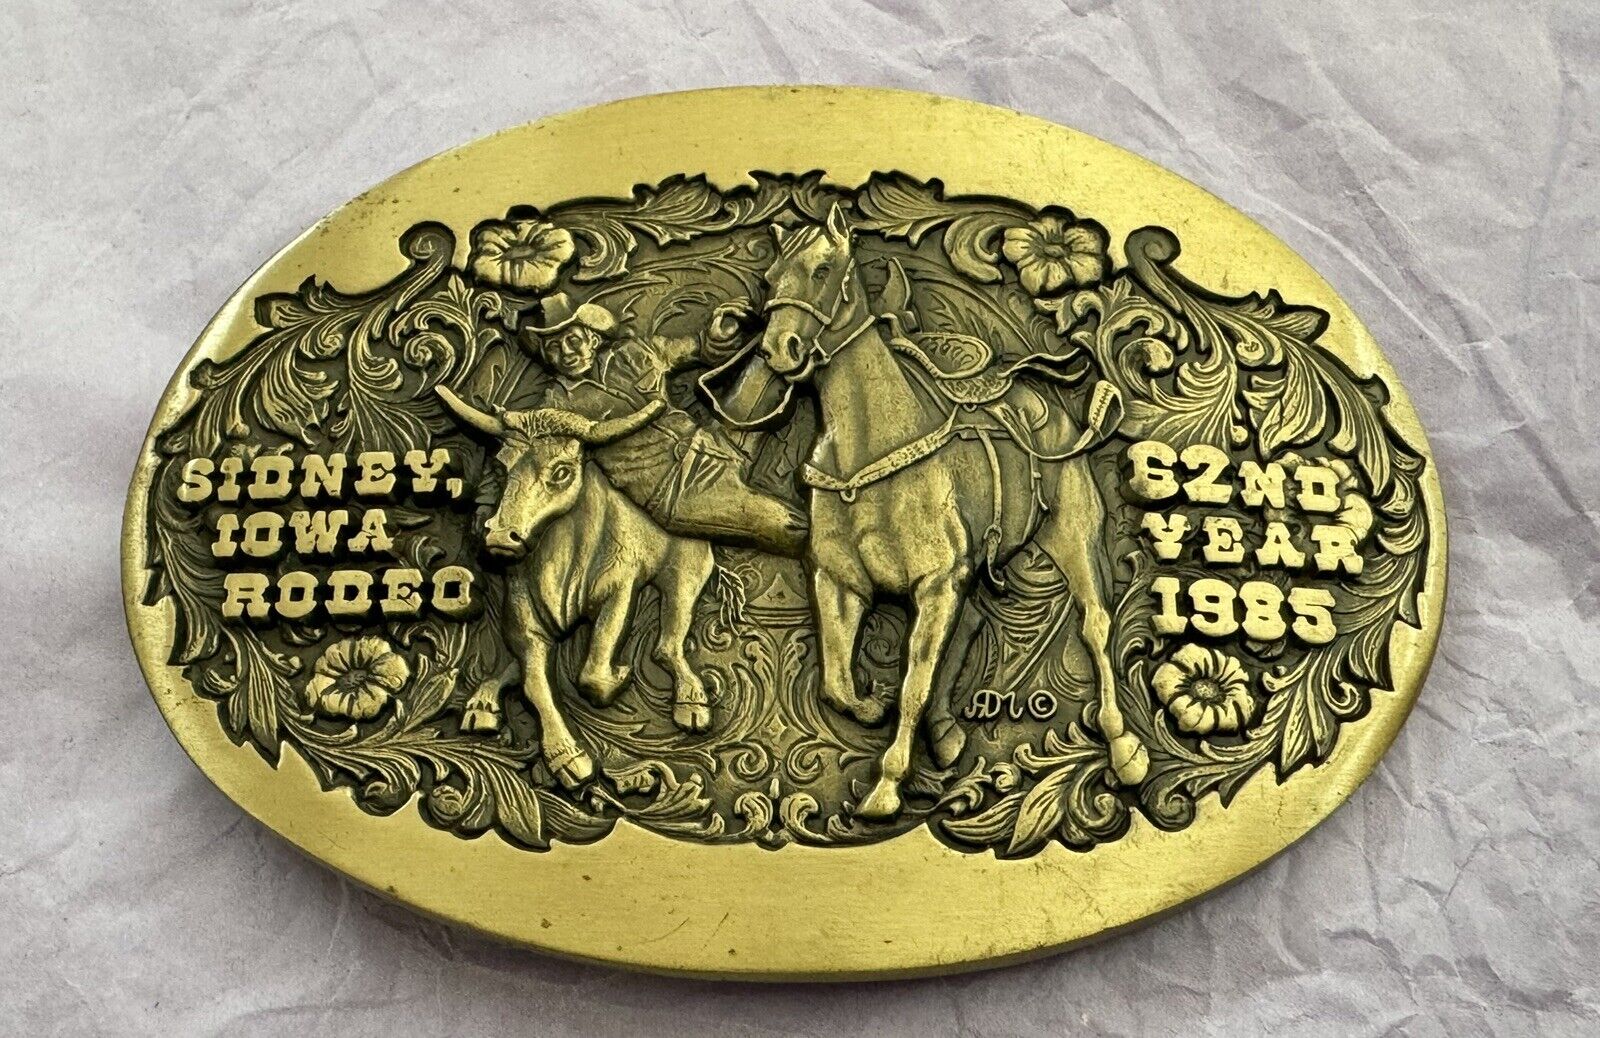 Rare Vintage 1985 Sidney Iowa Rodeo Buckle No 26 Ltd Edition Trophy Belt Buckle